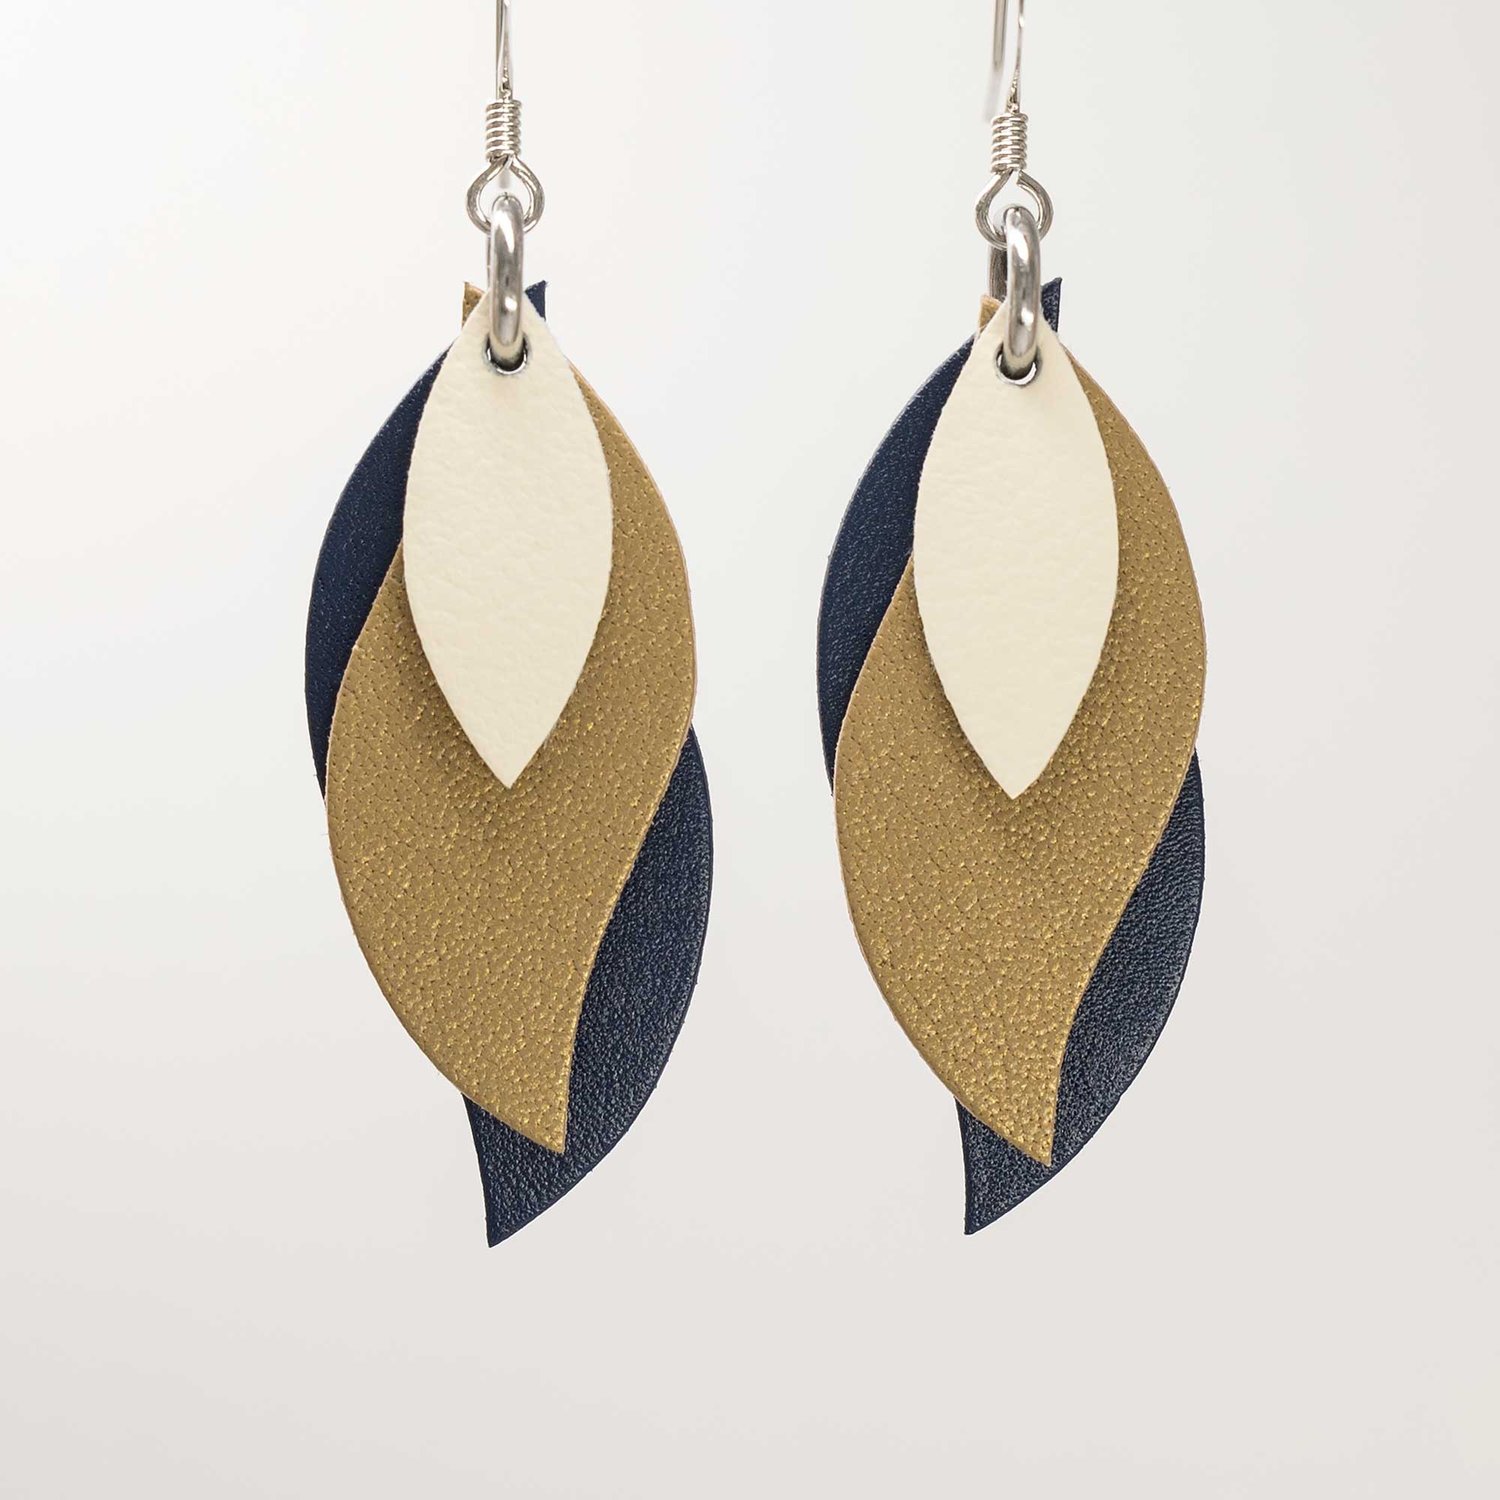 Image of Handmade Australian leather leaf earrings - Cream, gold, dark khaki green [LGG-025]